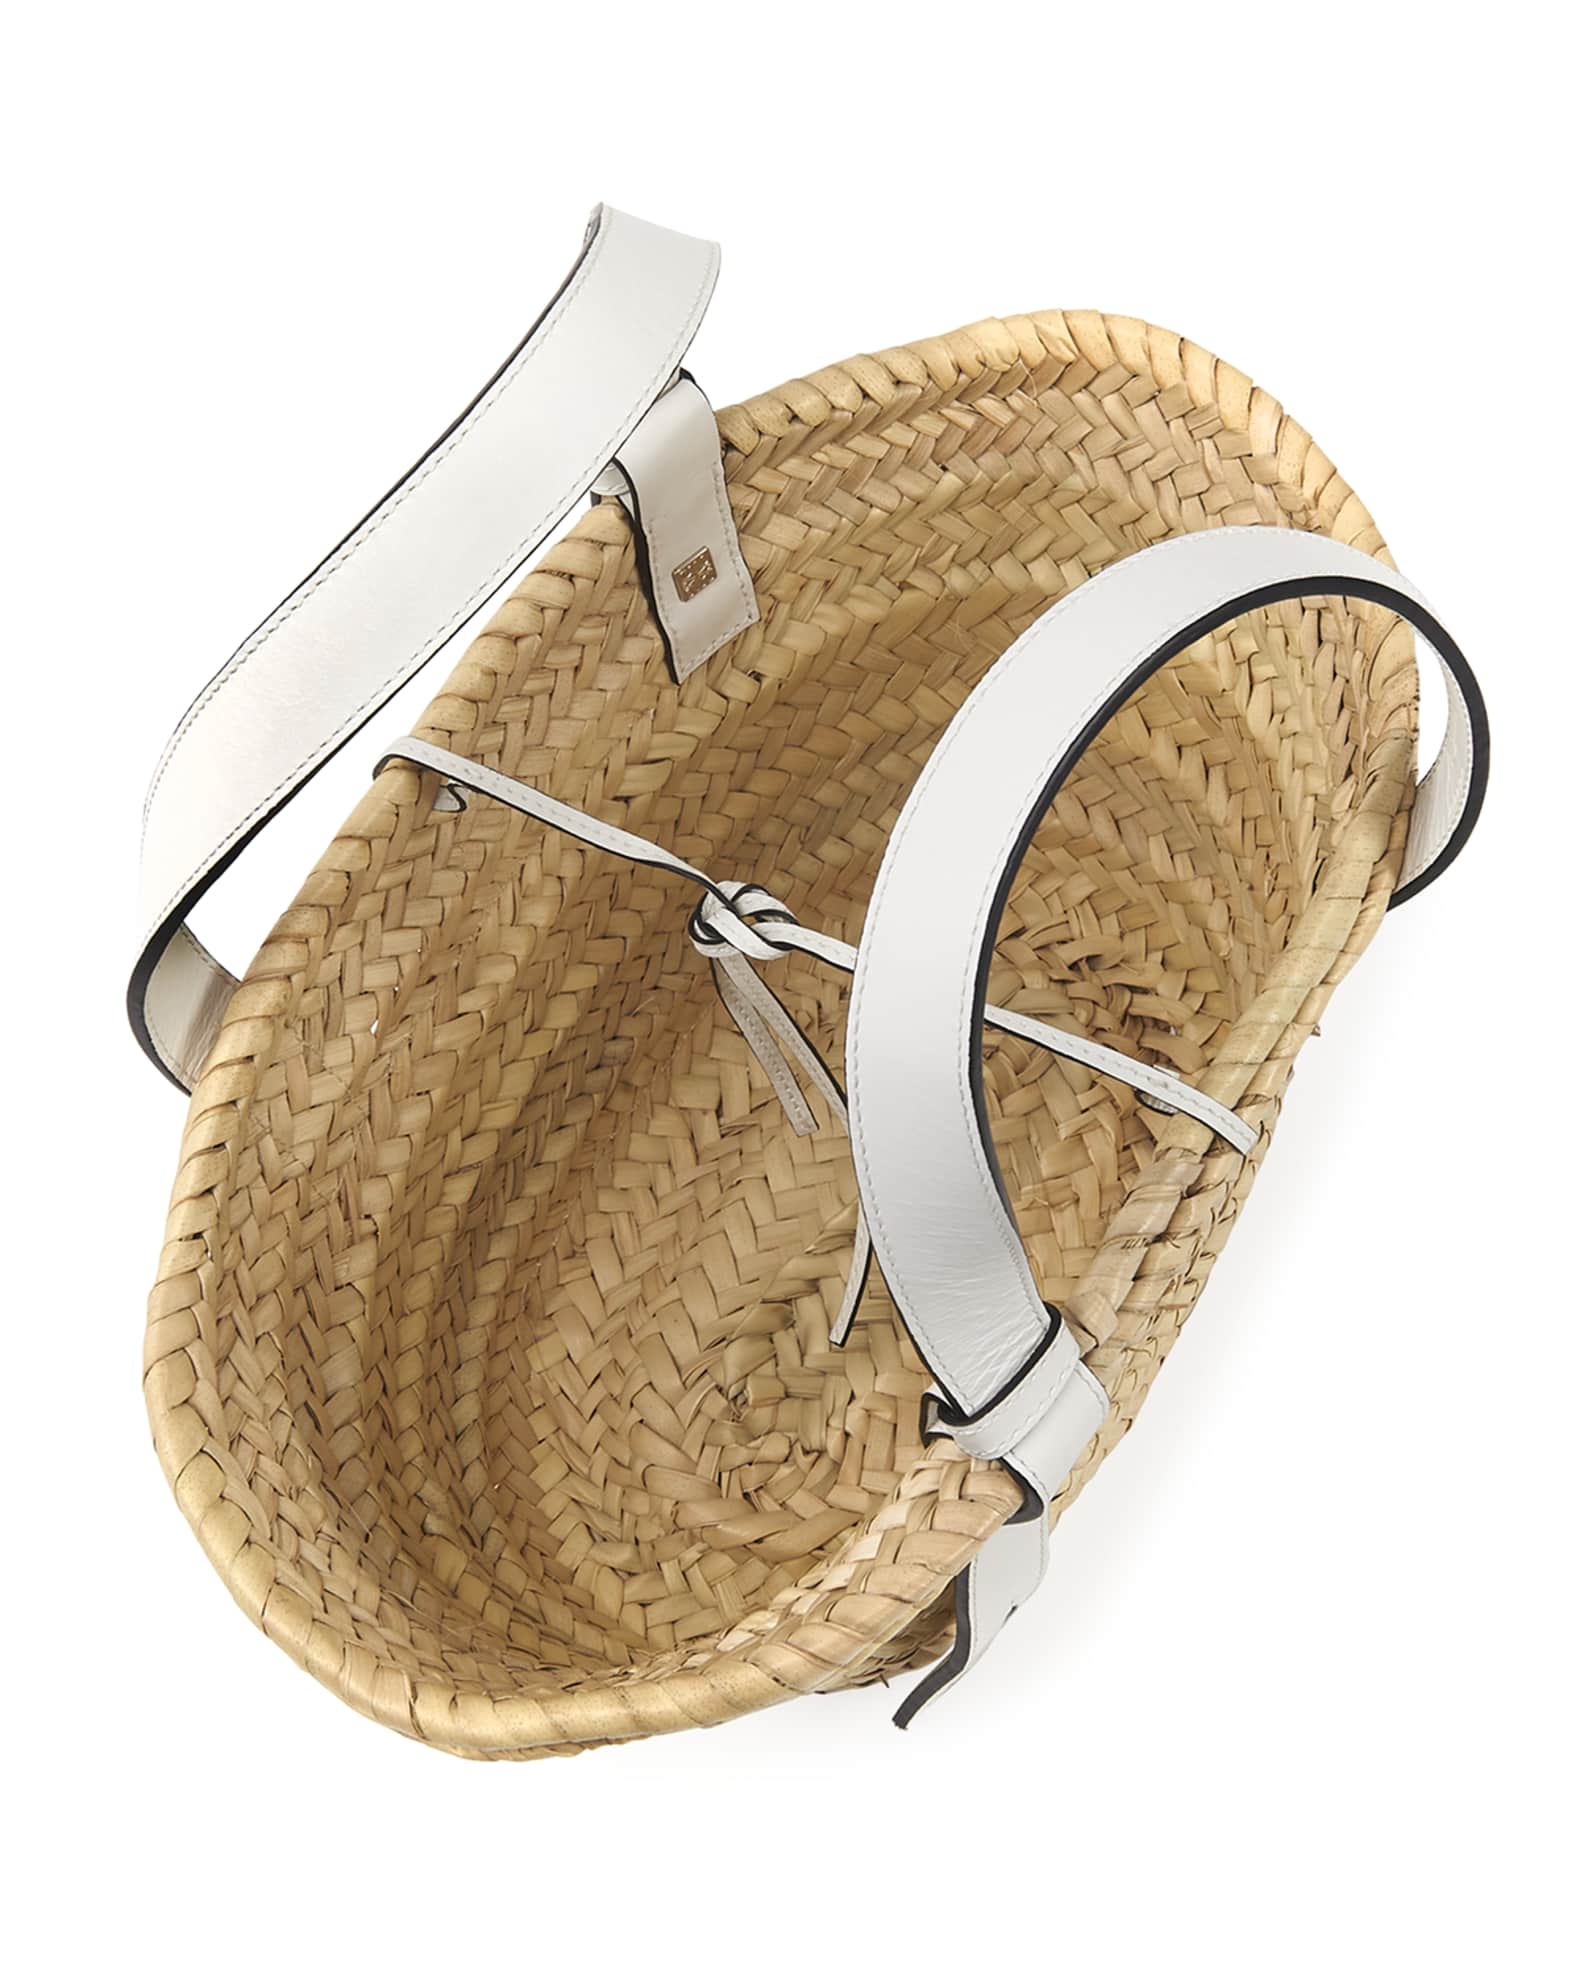 Loewe – Paula's Ibiza Small Shell Basket Bag Natural/Pecan